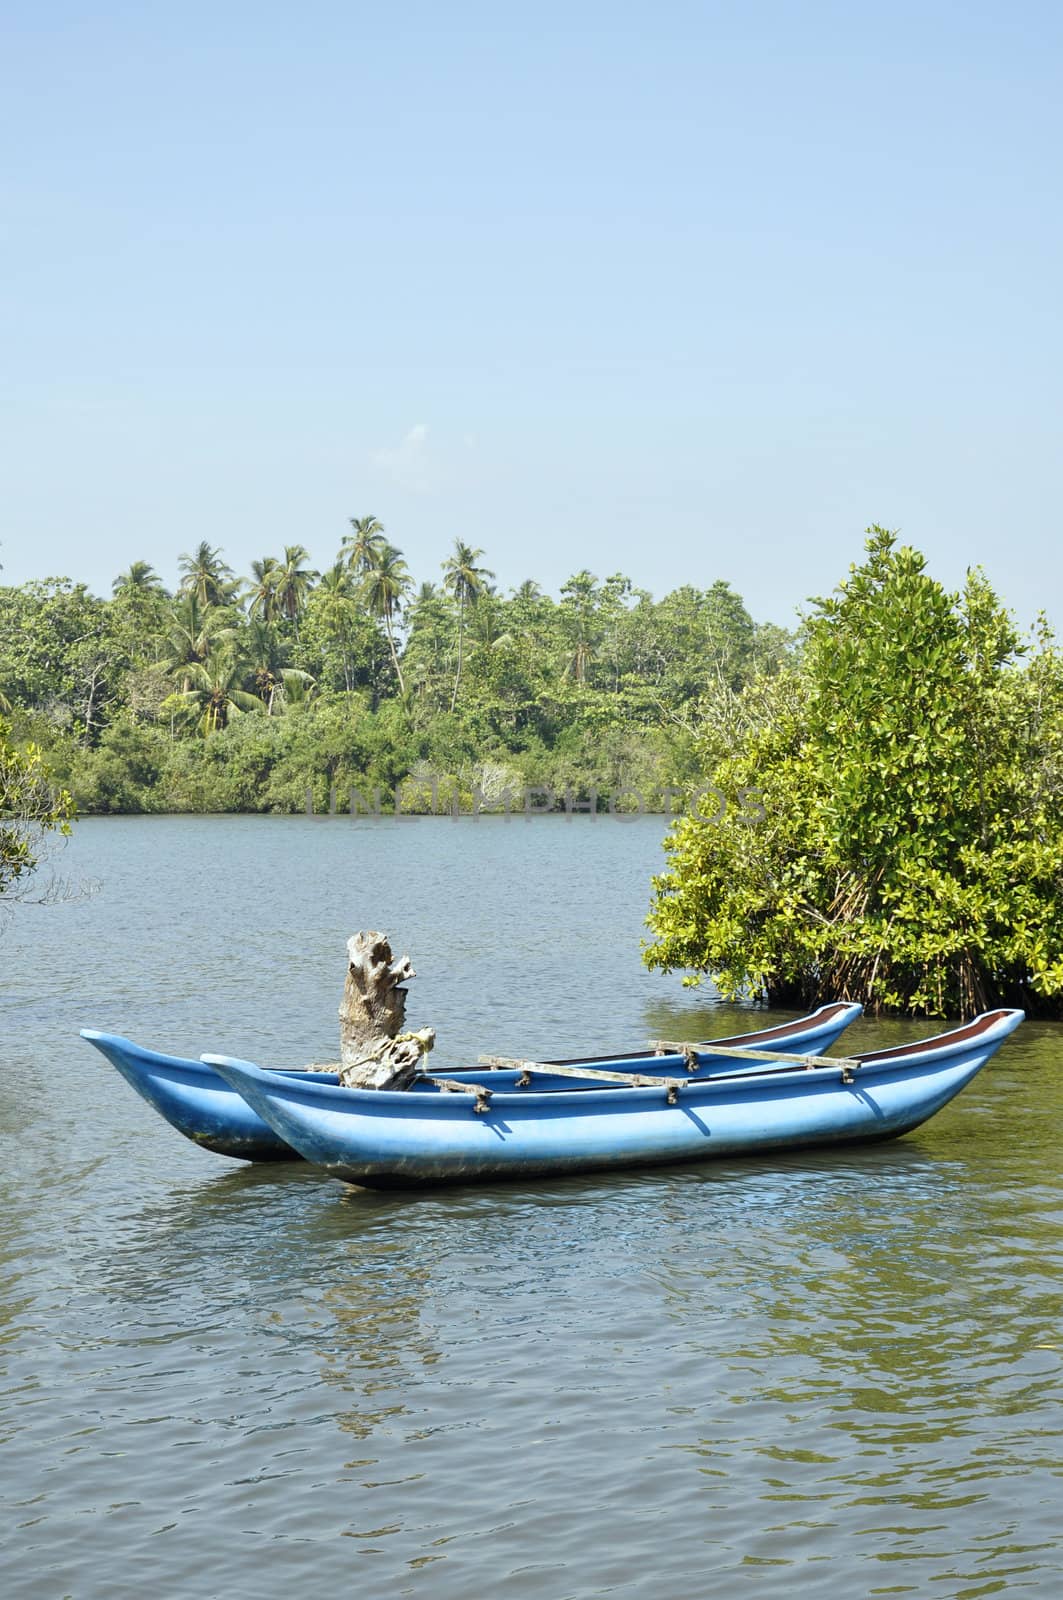 A bright blue boat beautifully stranded on a lake in Sri Lanka by kdreams02